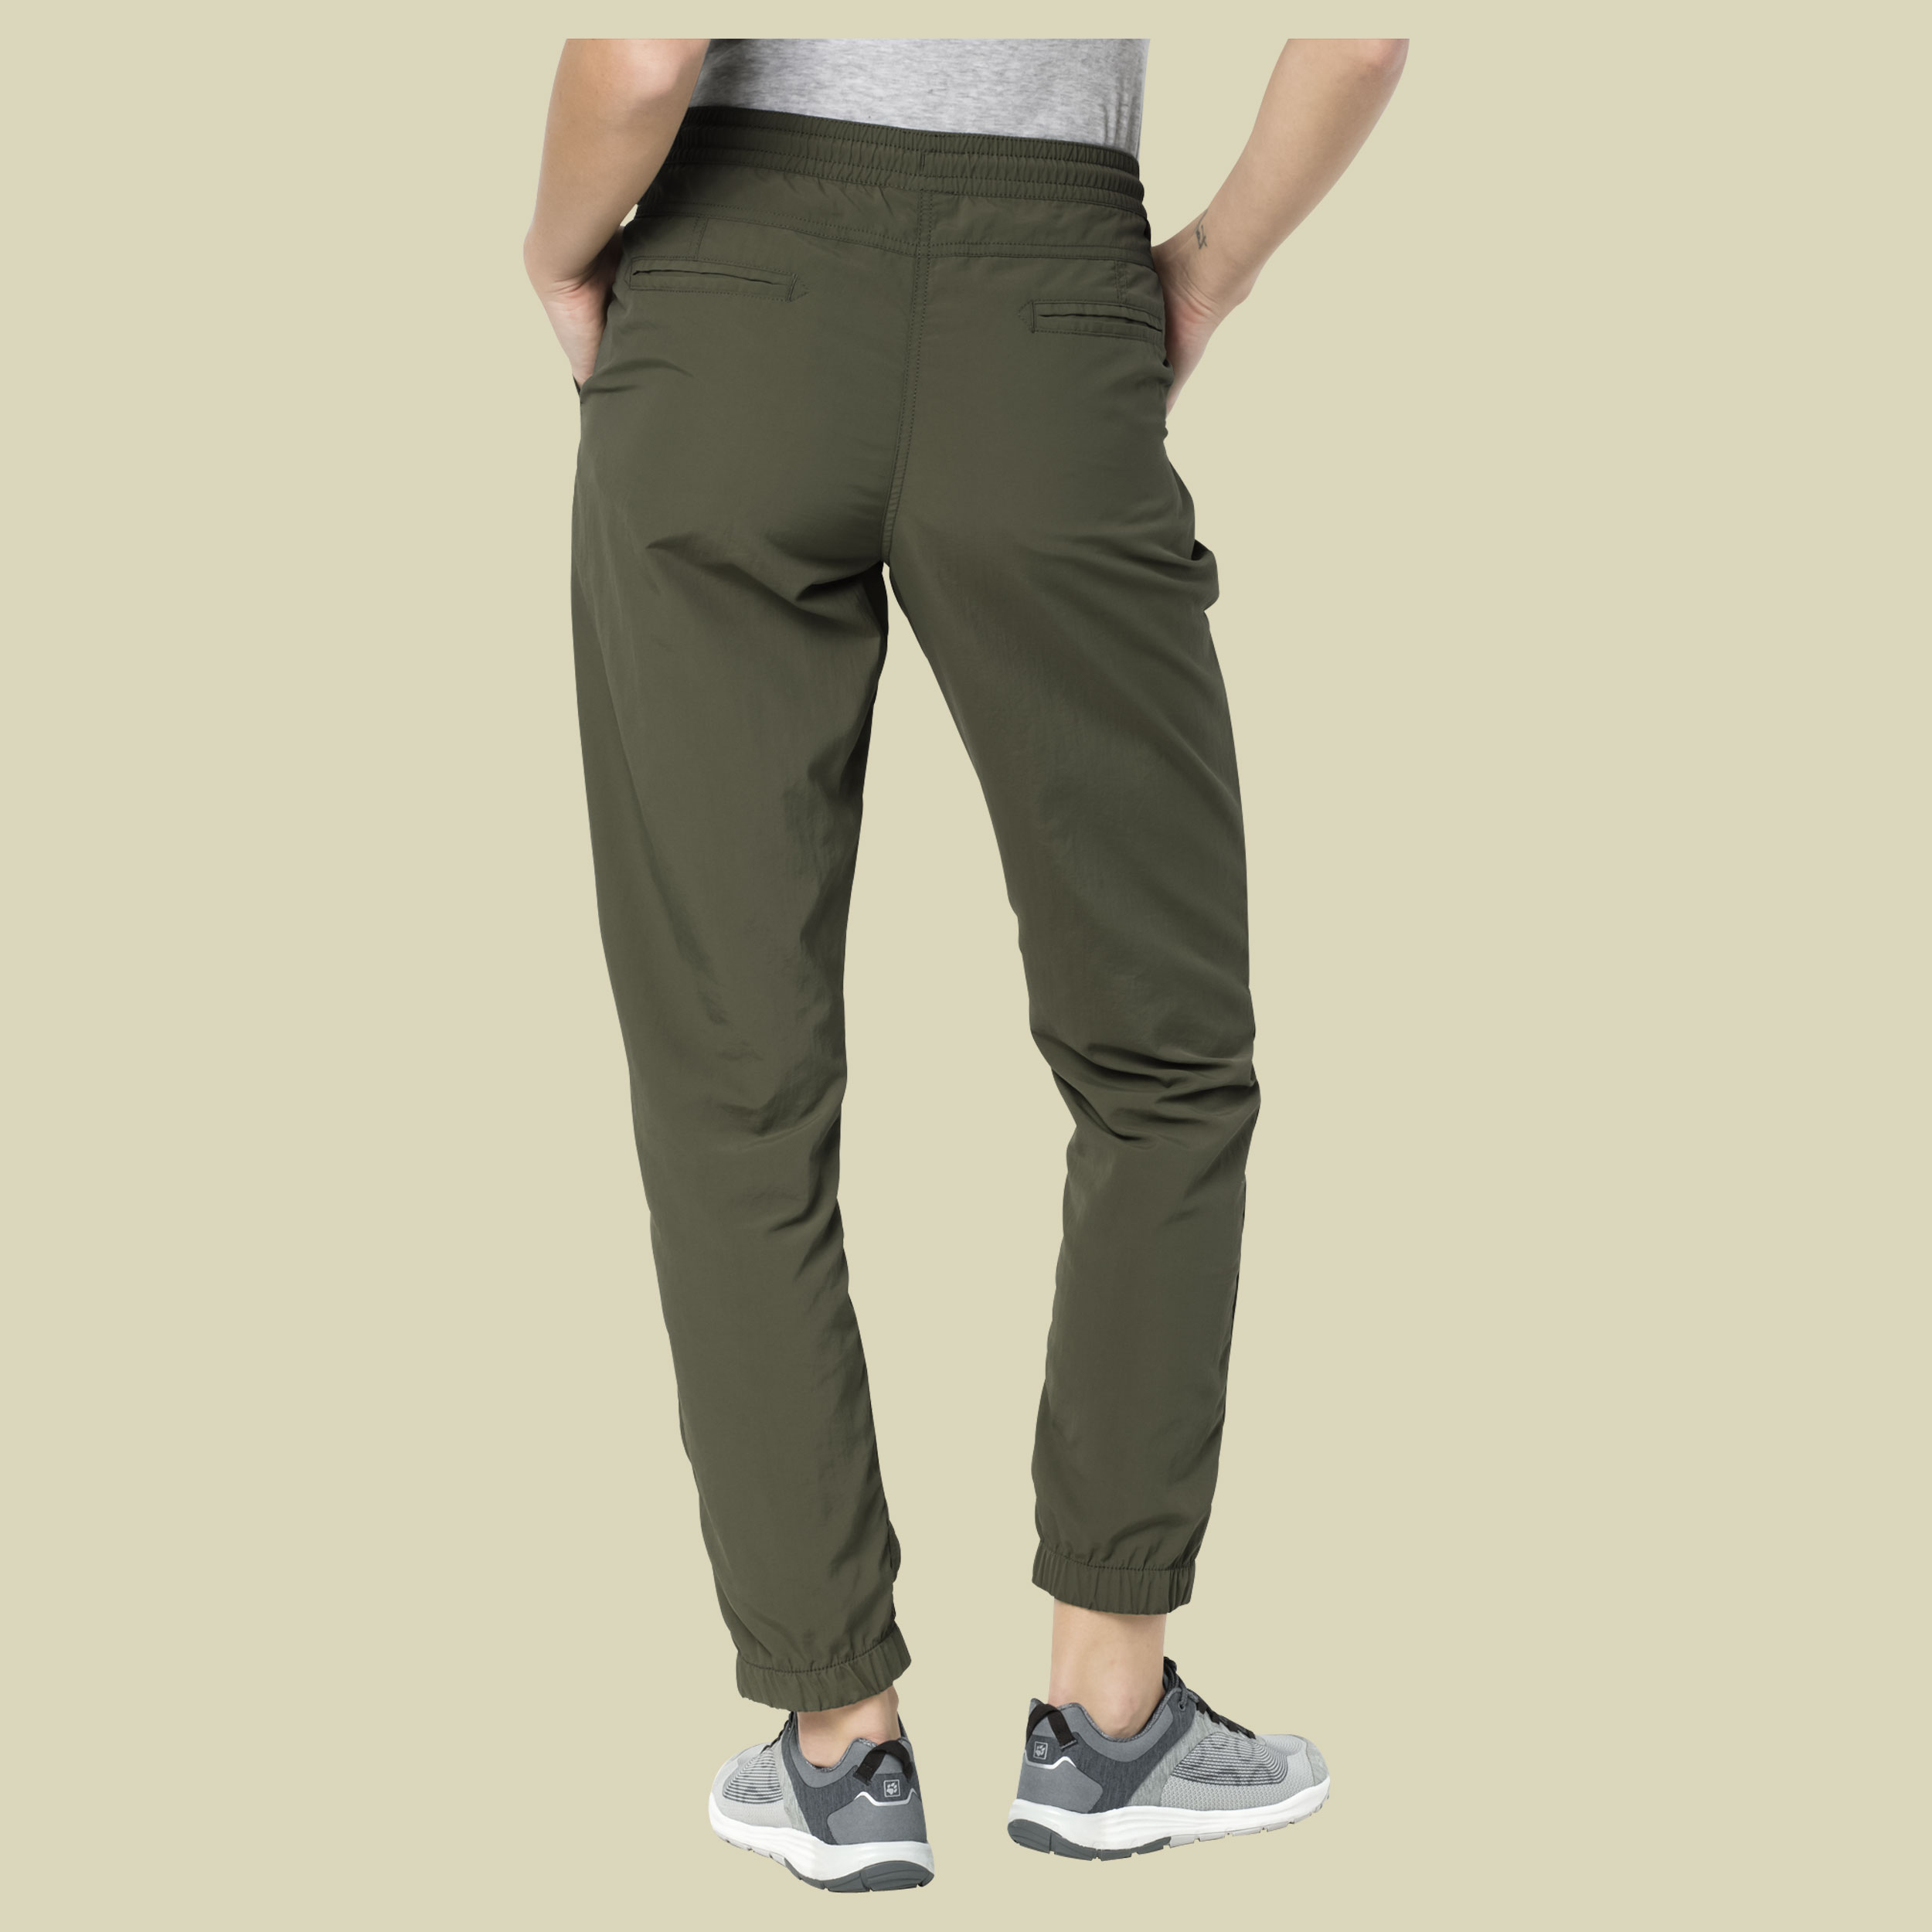 Kalahari Cuffed Pants Women Größe XL Farbe woodland green